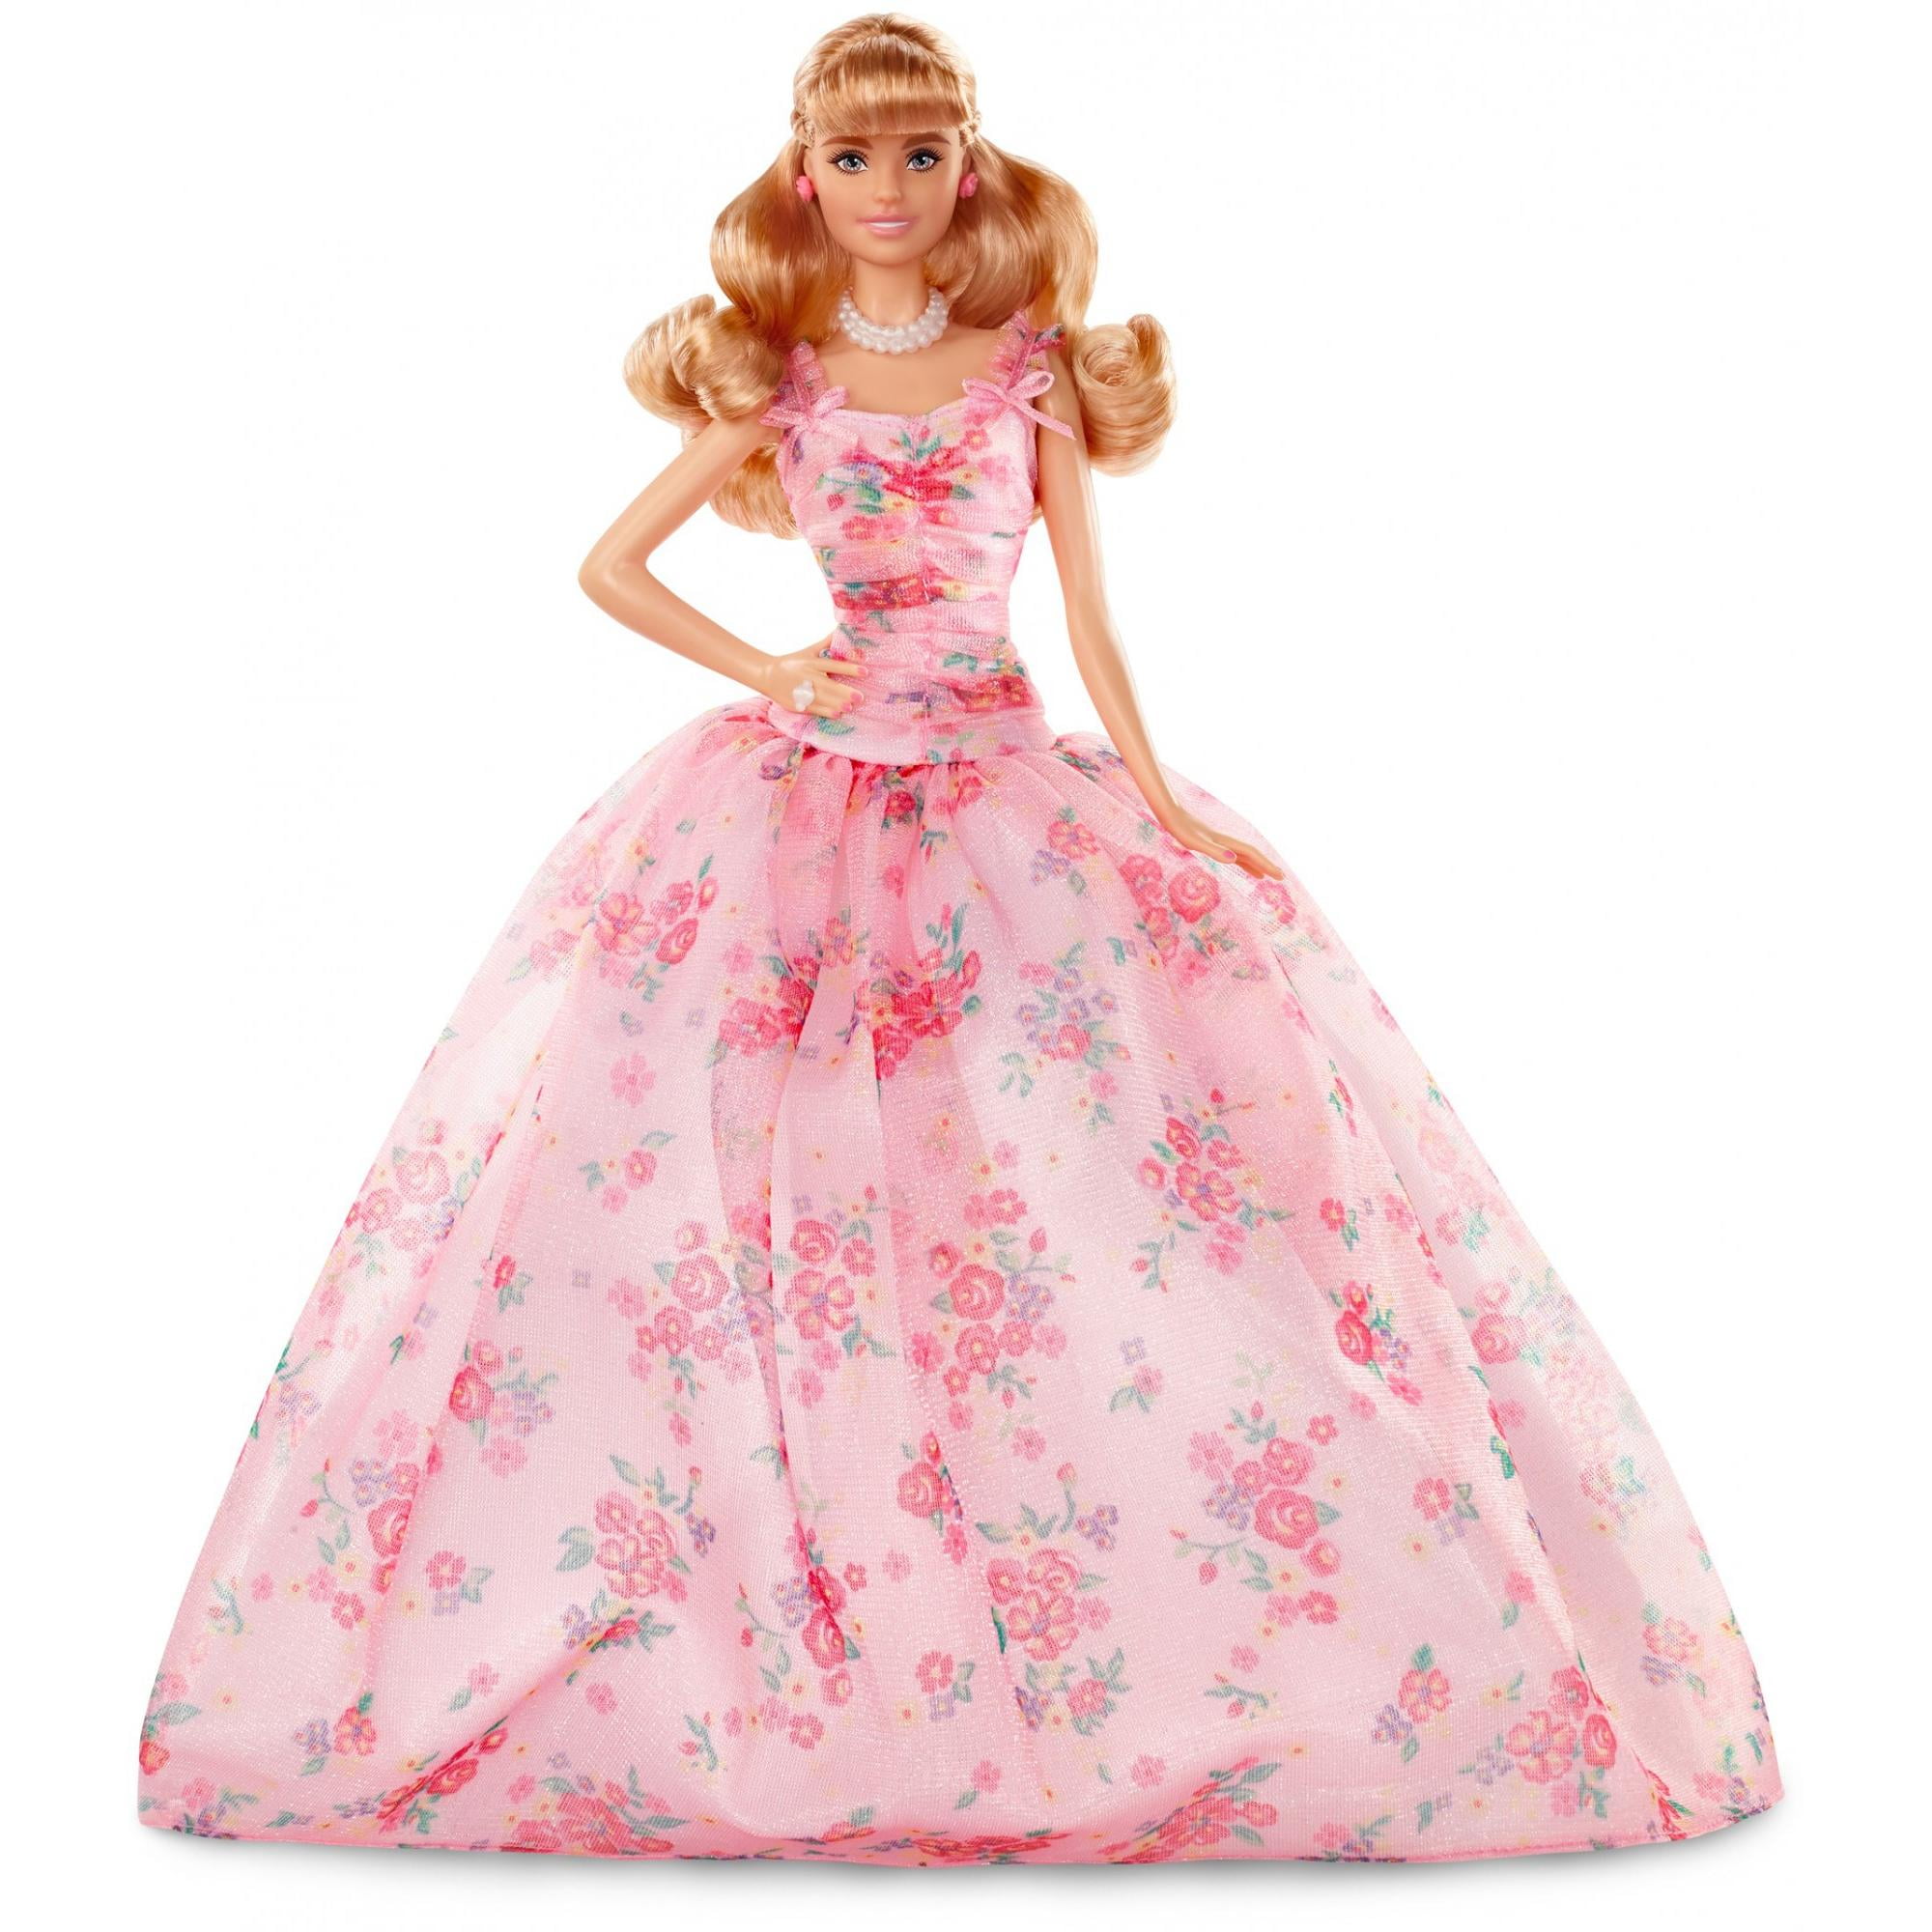 NEW Happy Birthday Barbie Doll Caucasian Blonde Pink Dress 